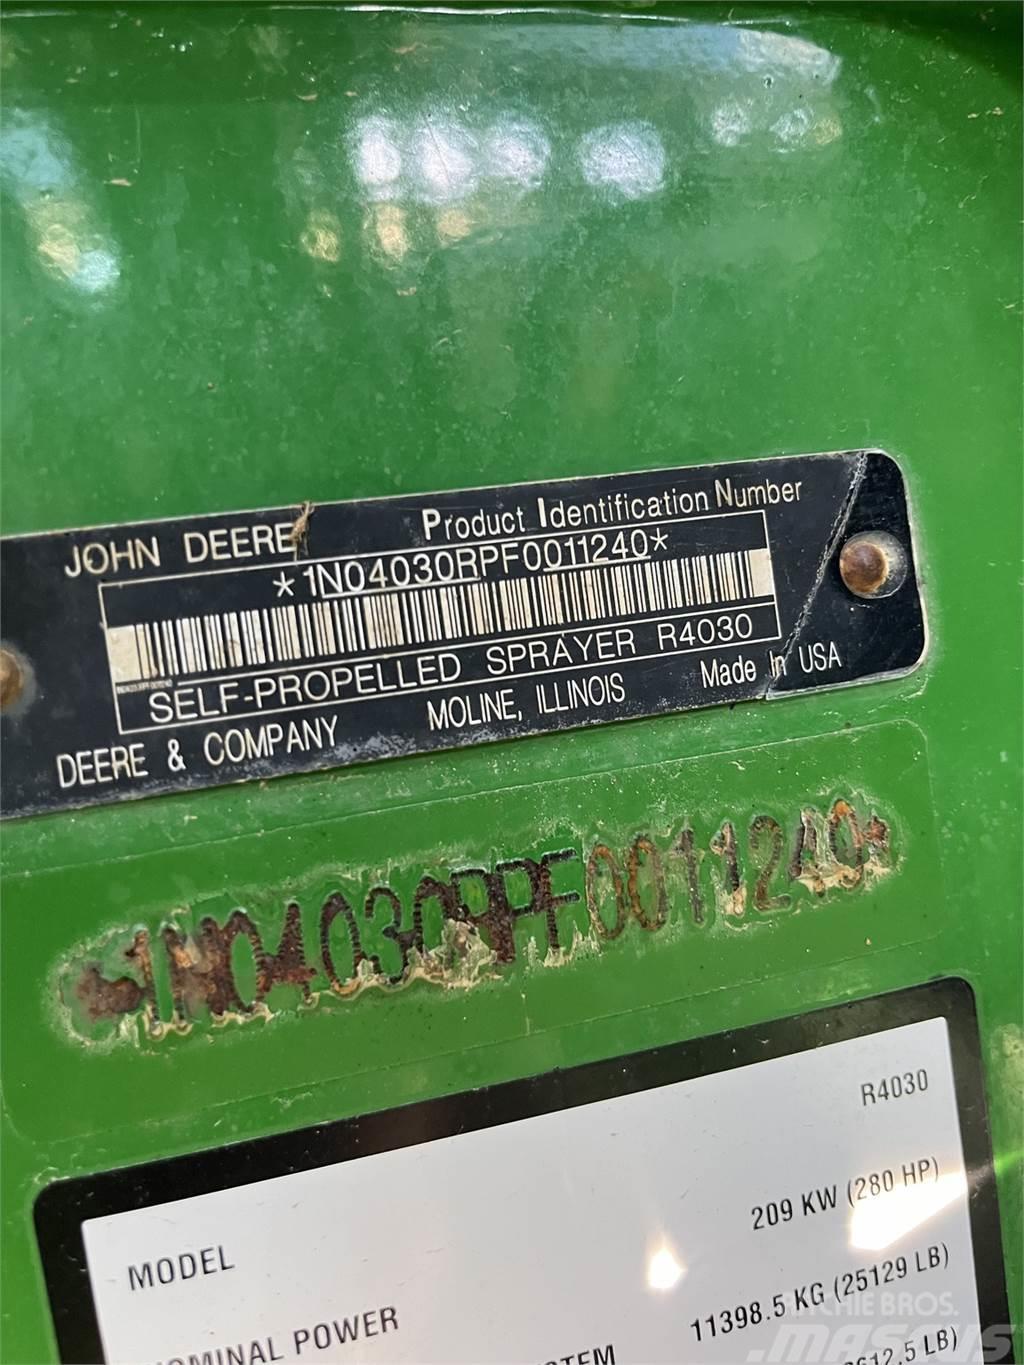 John Deere R4030 Trailed sprayers